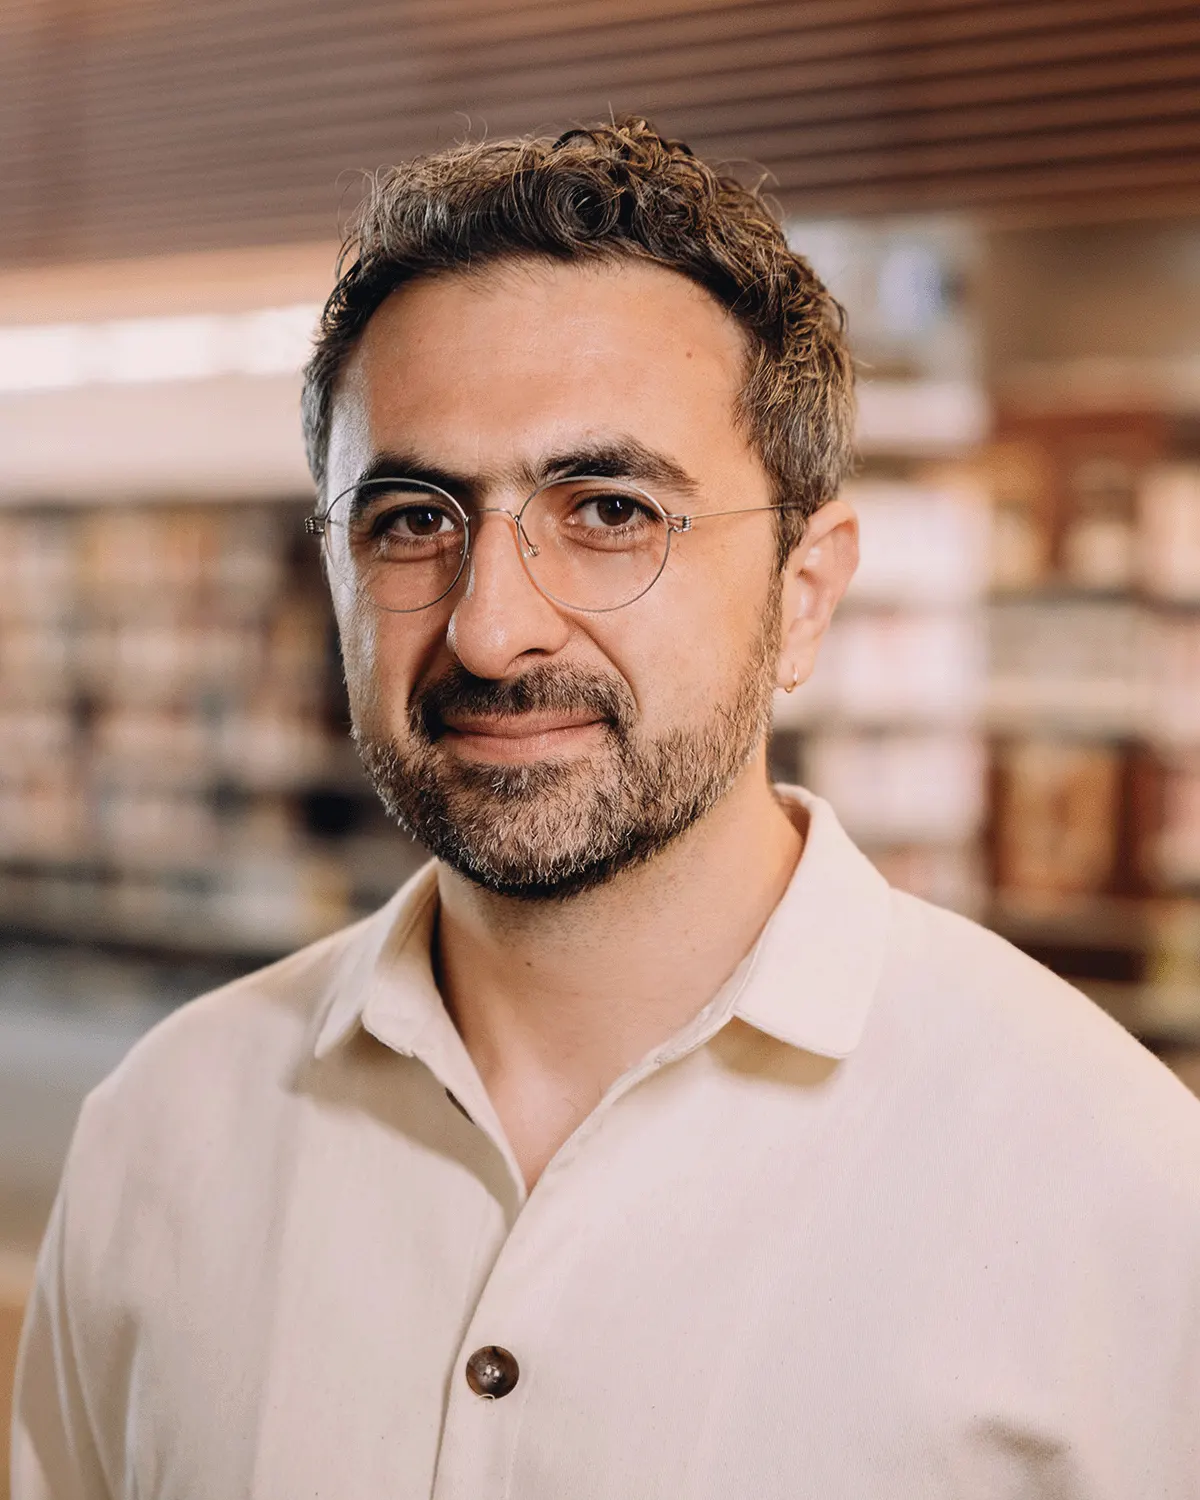 'The Coming Wave': Mustafa Suleyman's Call for AI Regulation